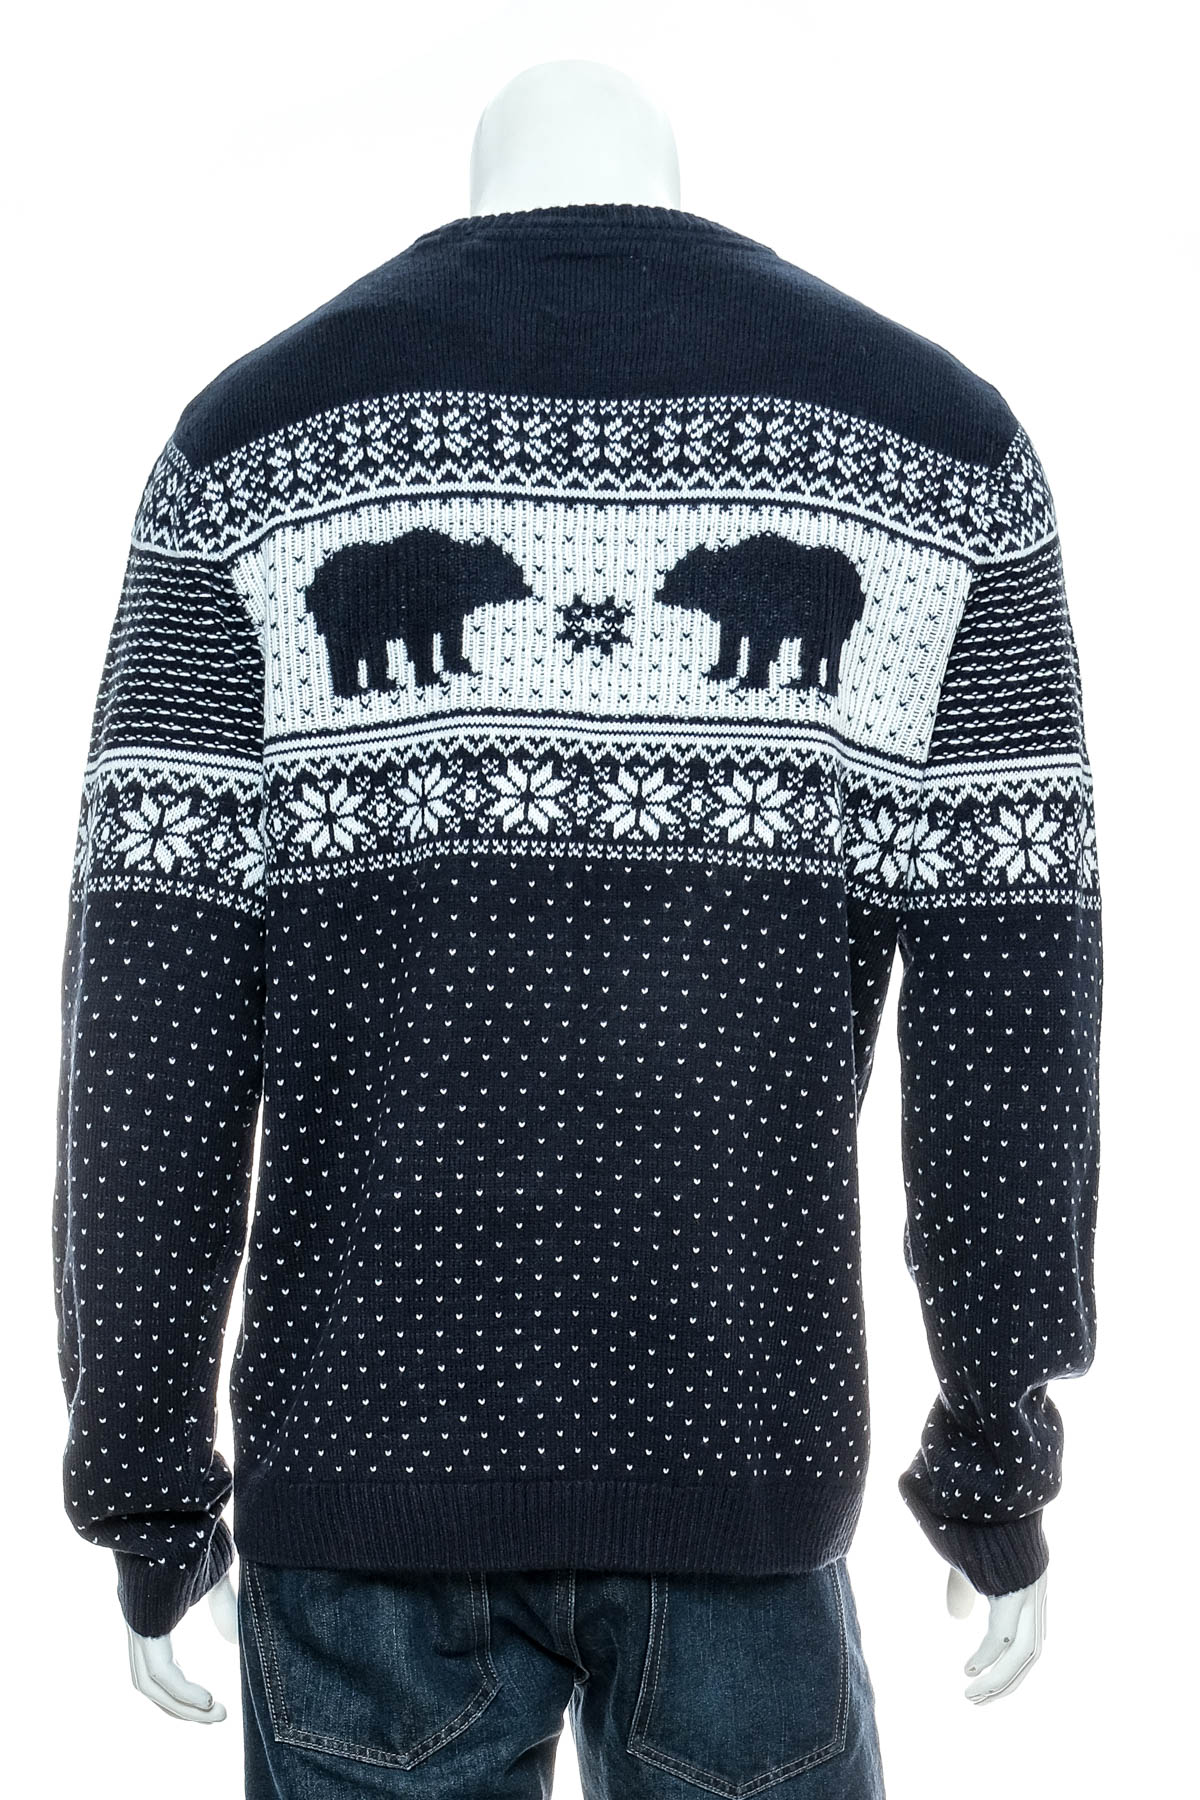 Men's sweater - Angelo Litrico - 1